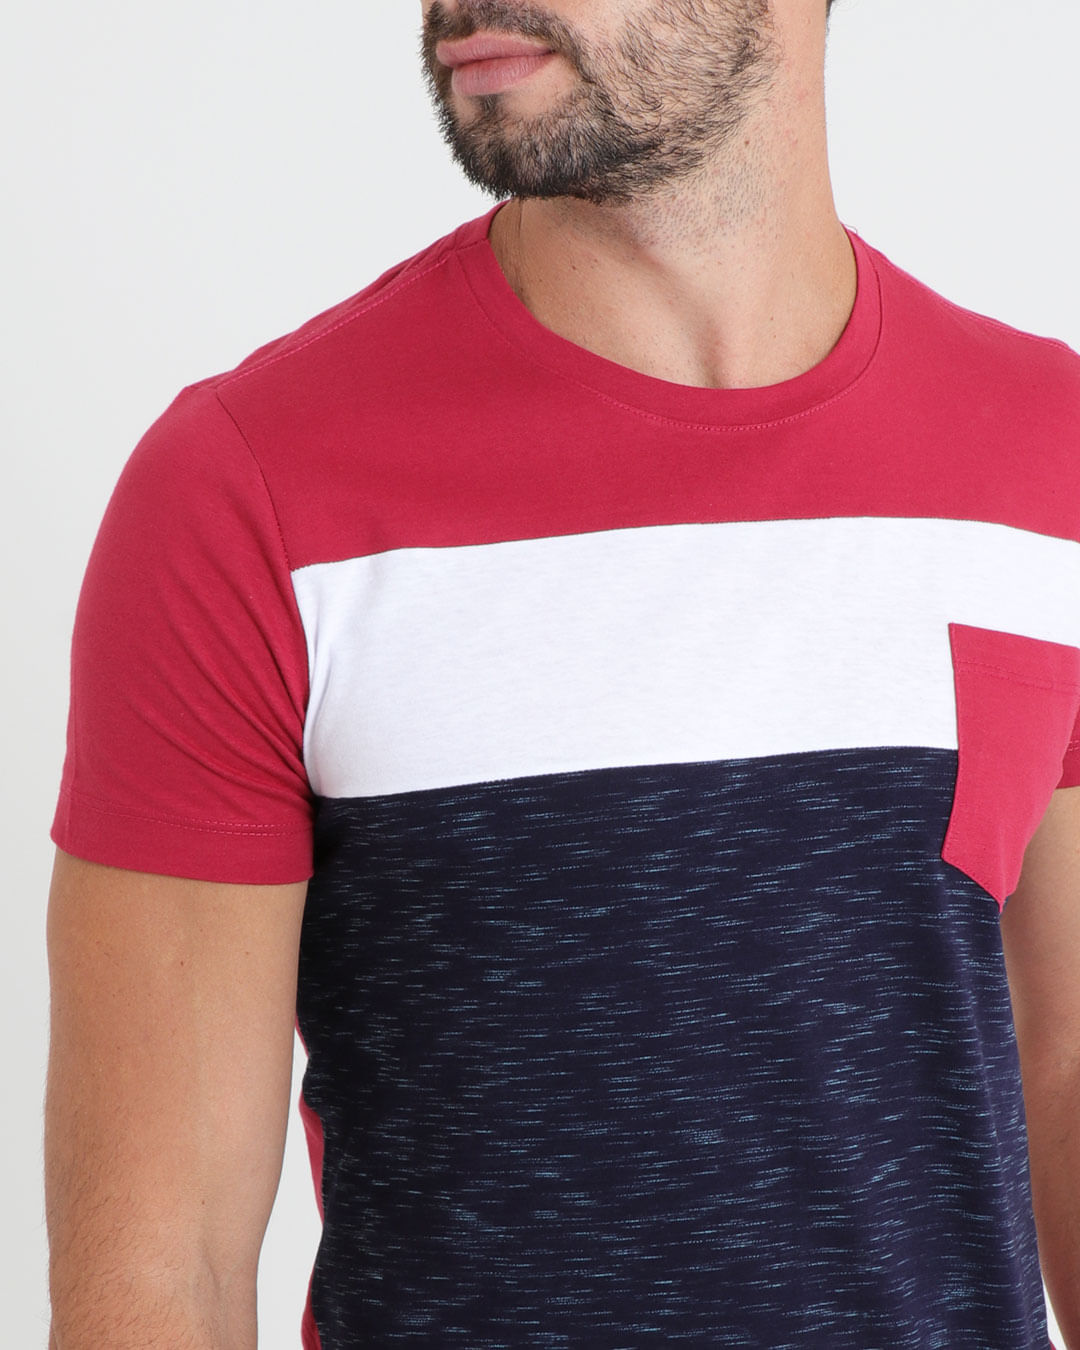 Camiseta-Masculina-Recorte-Multicor-Vermelha